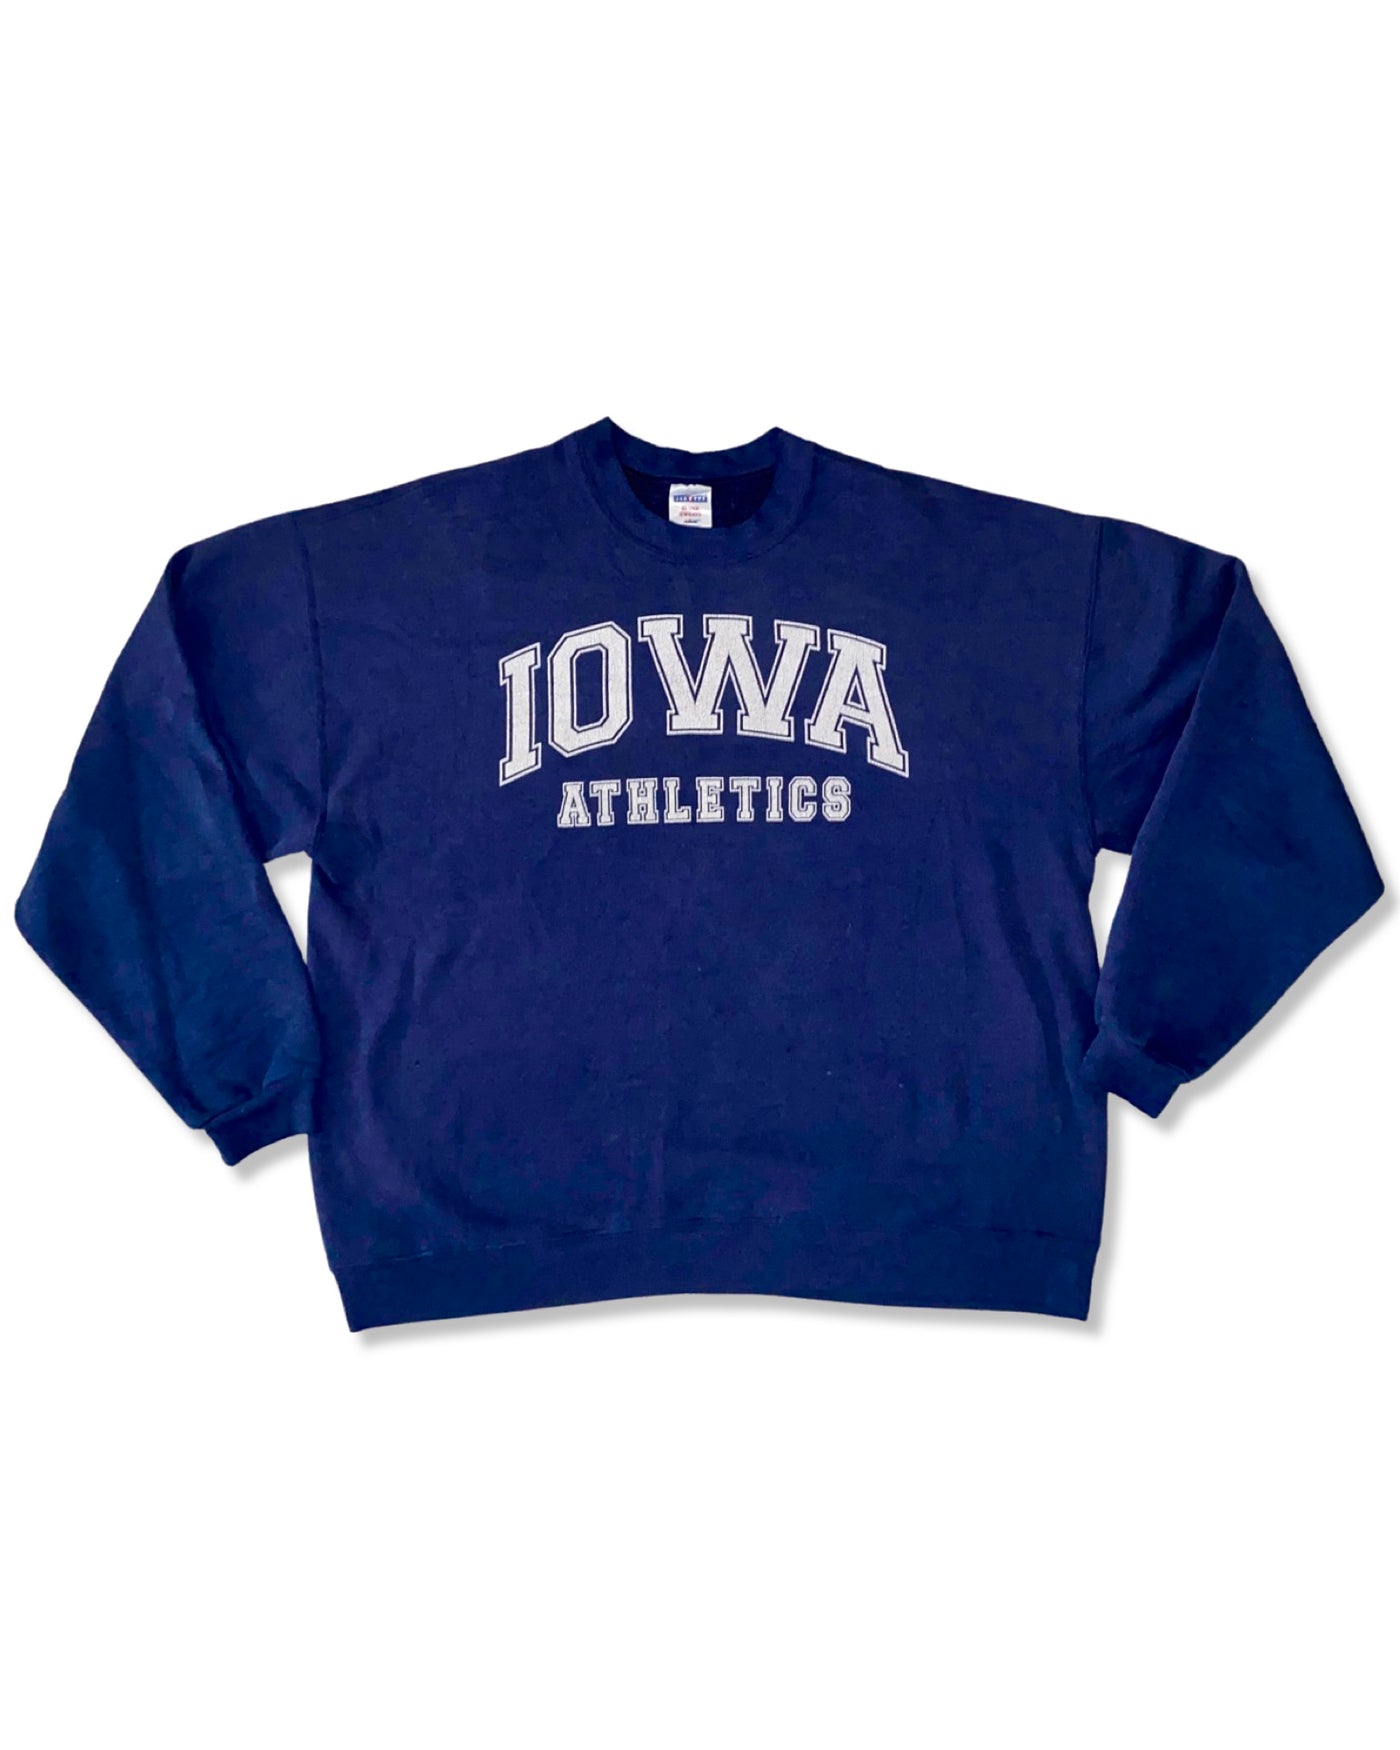 Vintage Iowa Athletics Crewneck